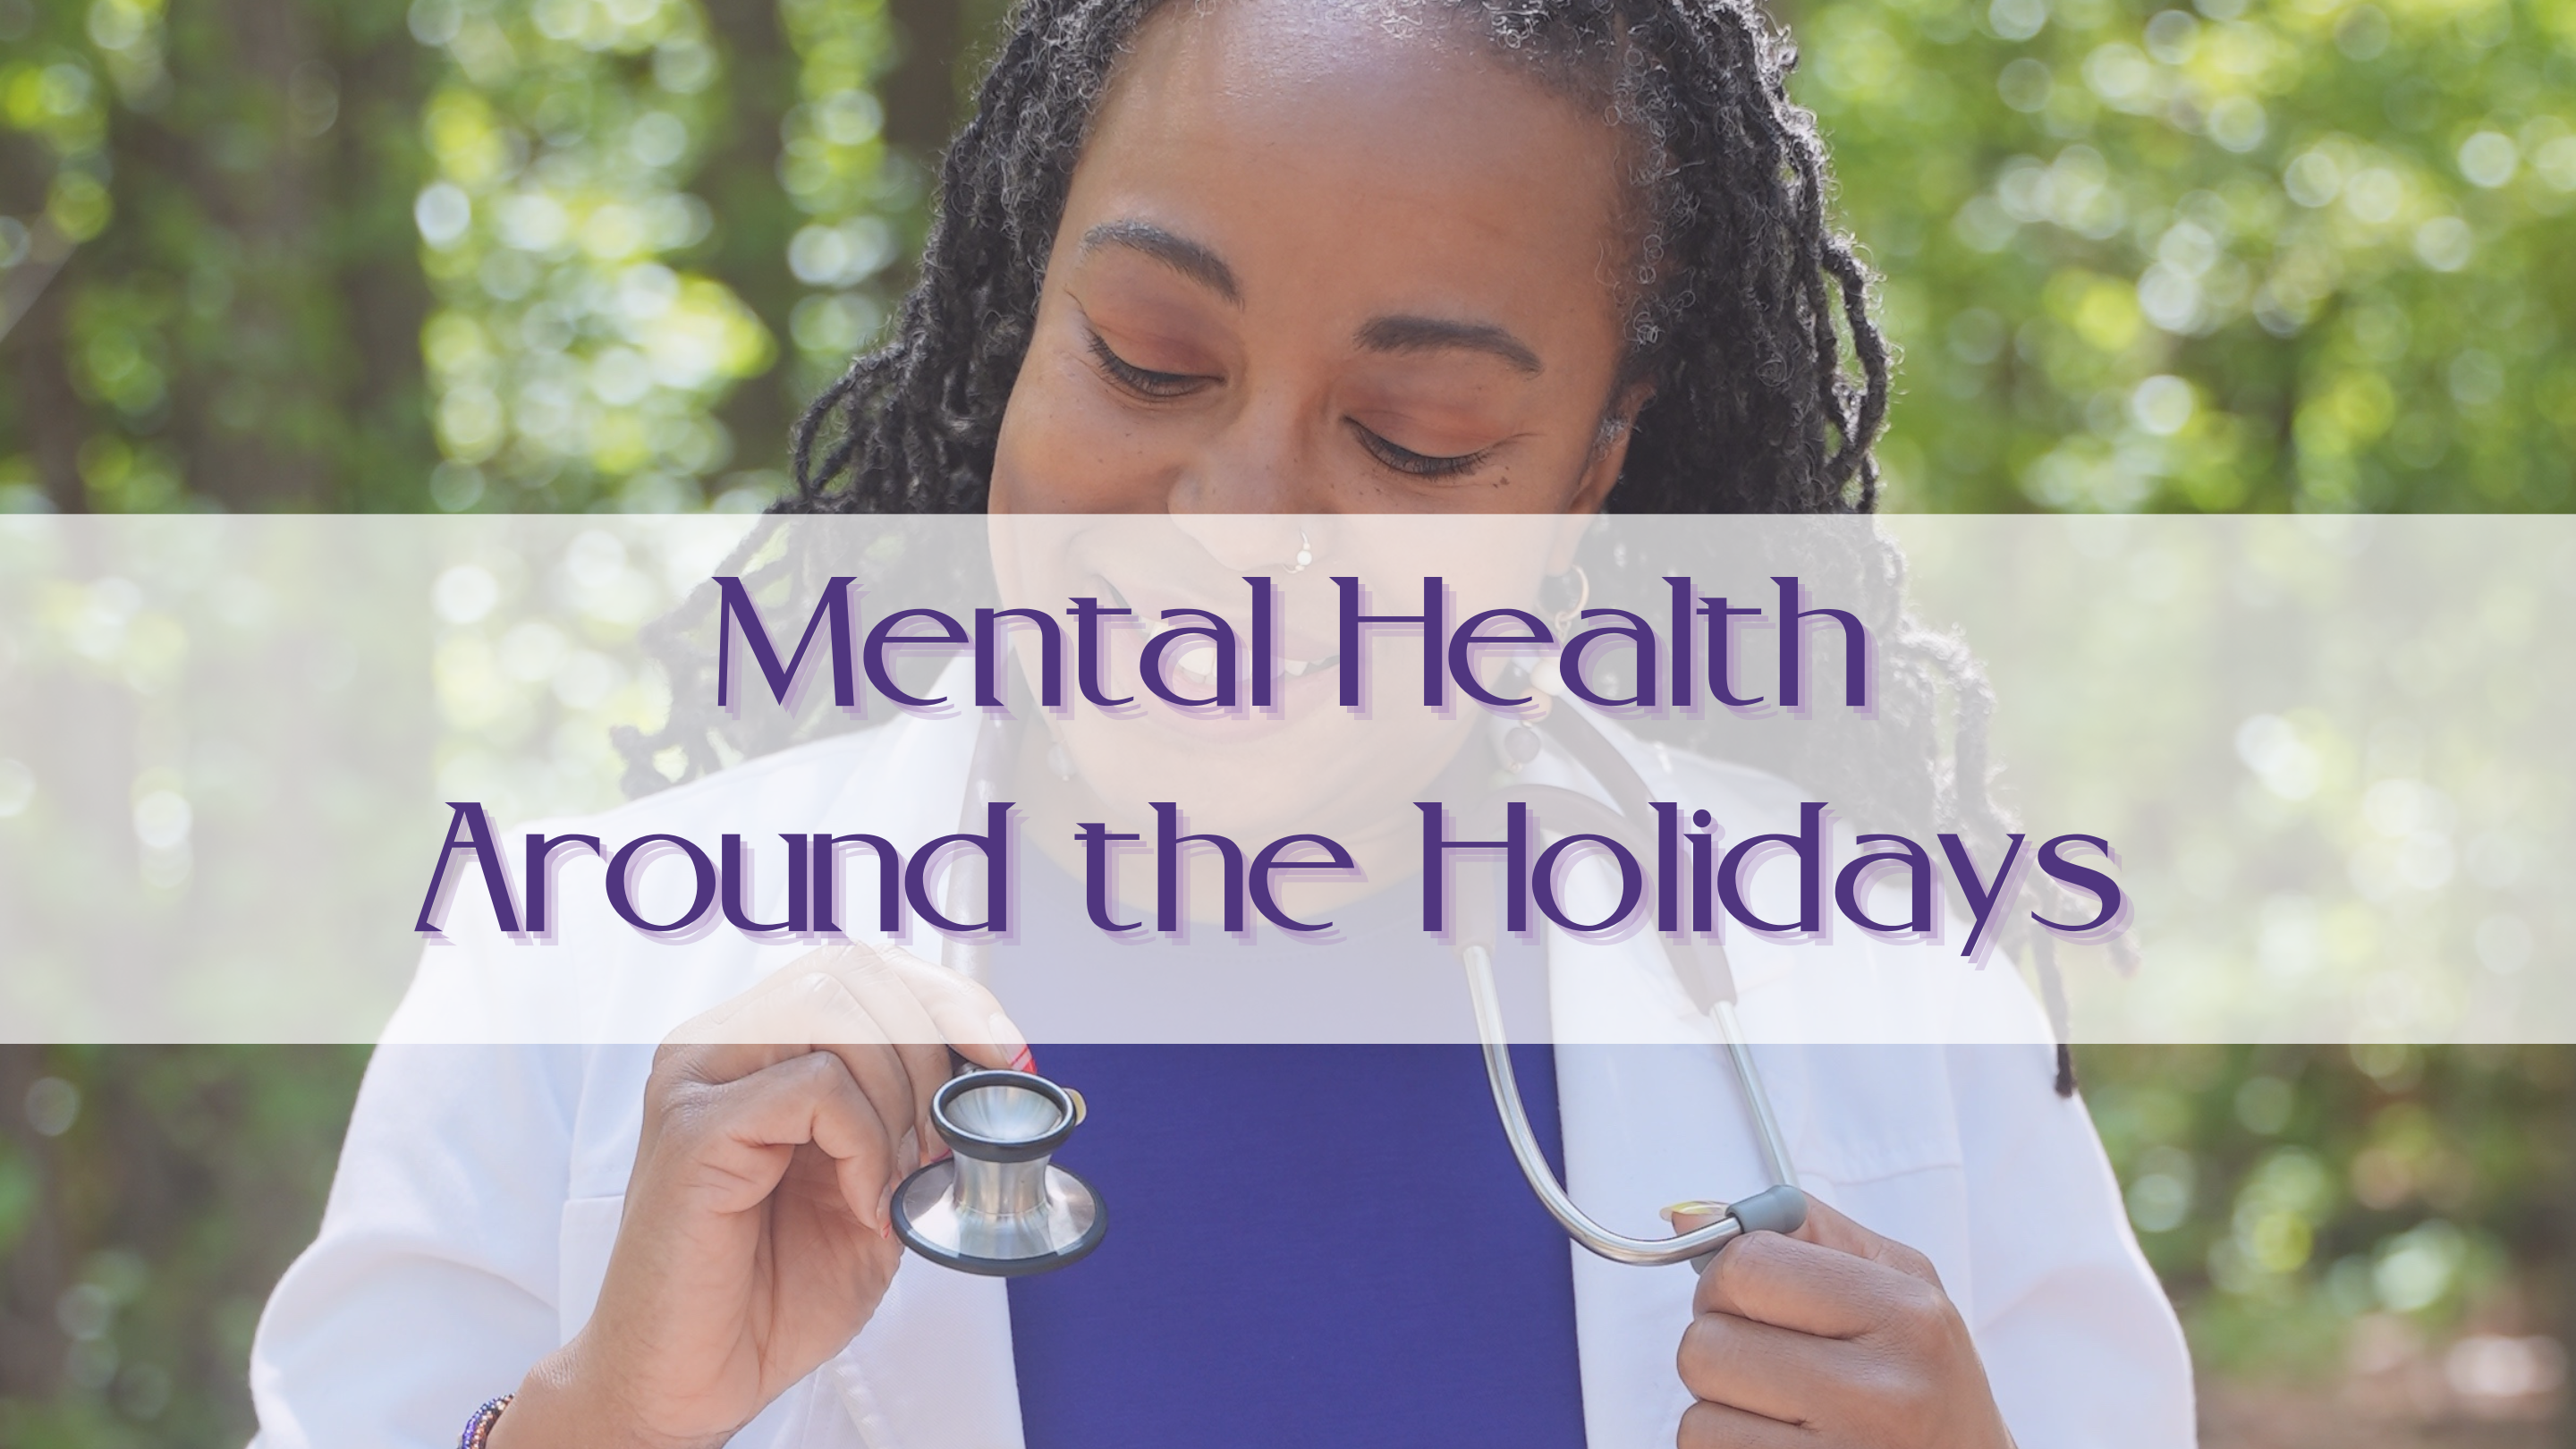 Mental Health Around the Holidays